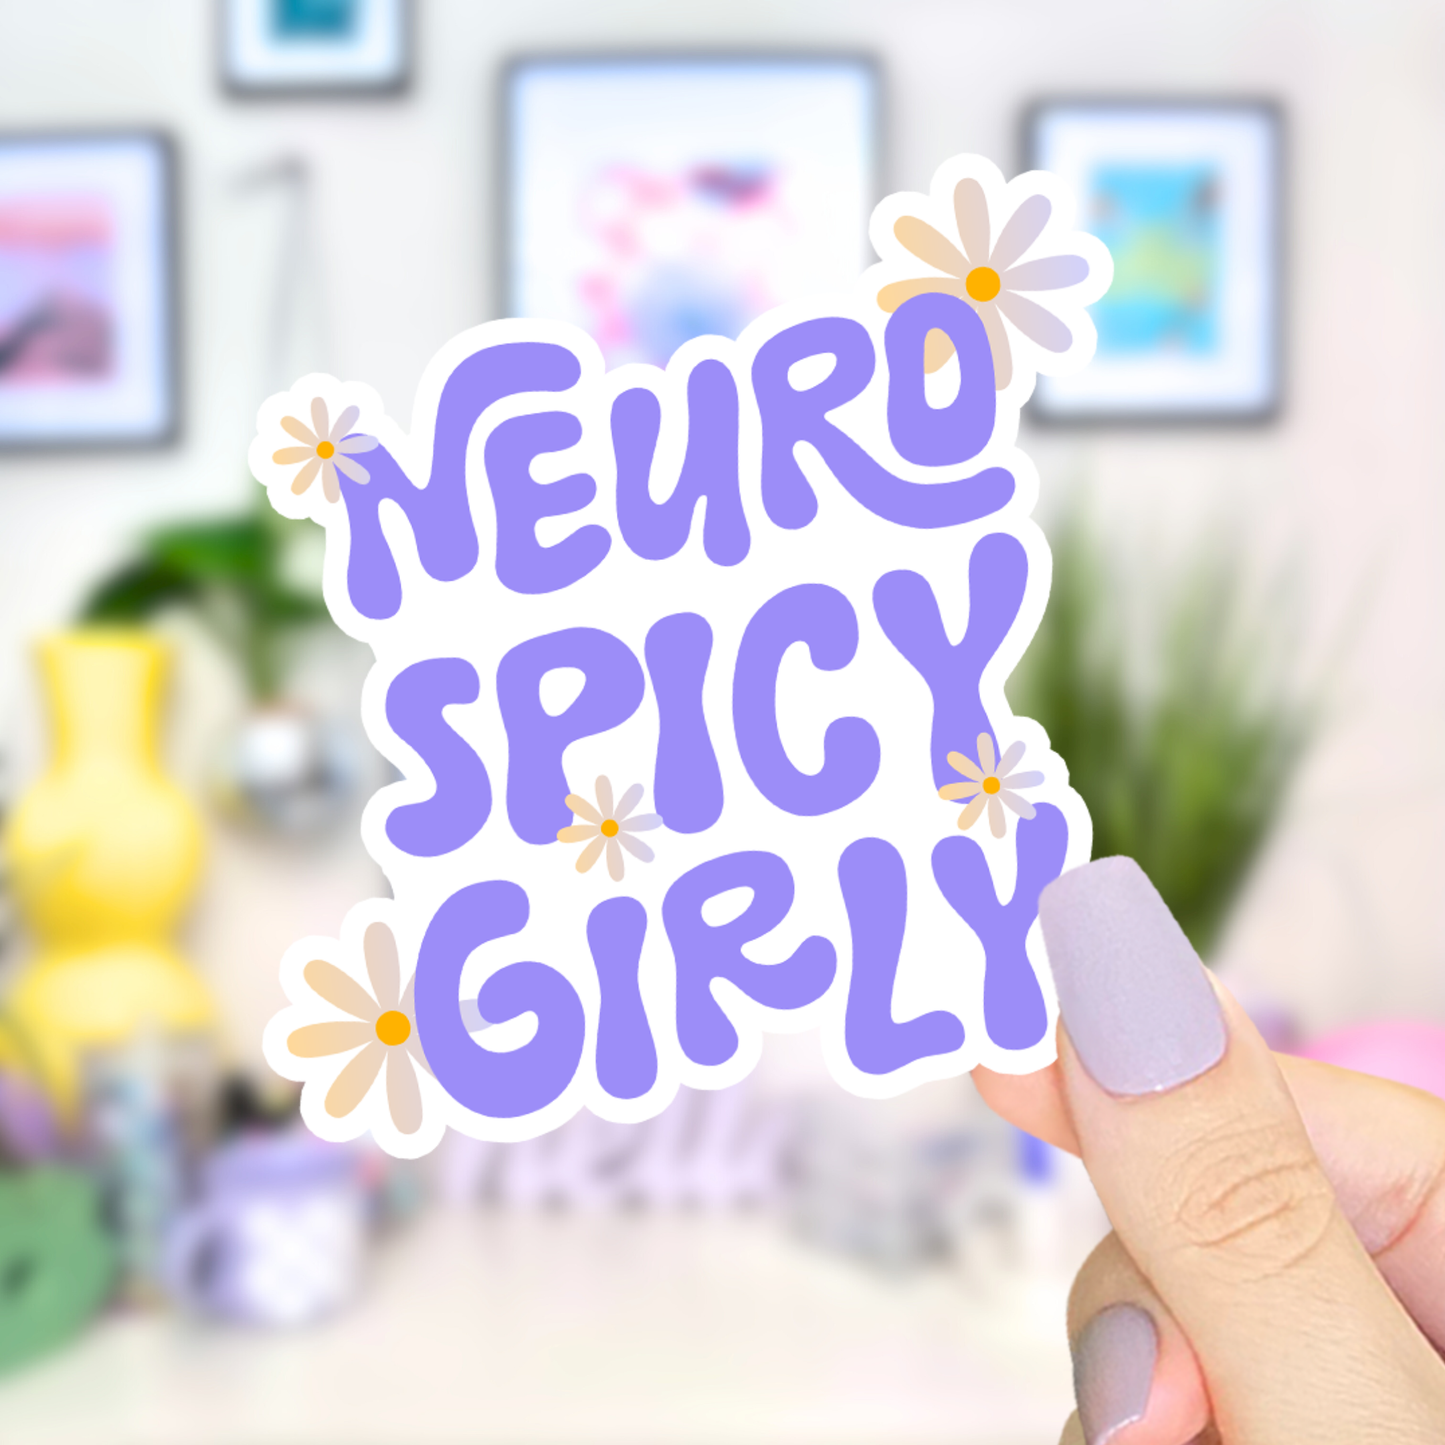 Neurospicy Girly Sticker